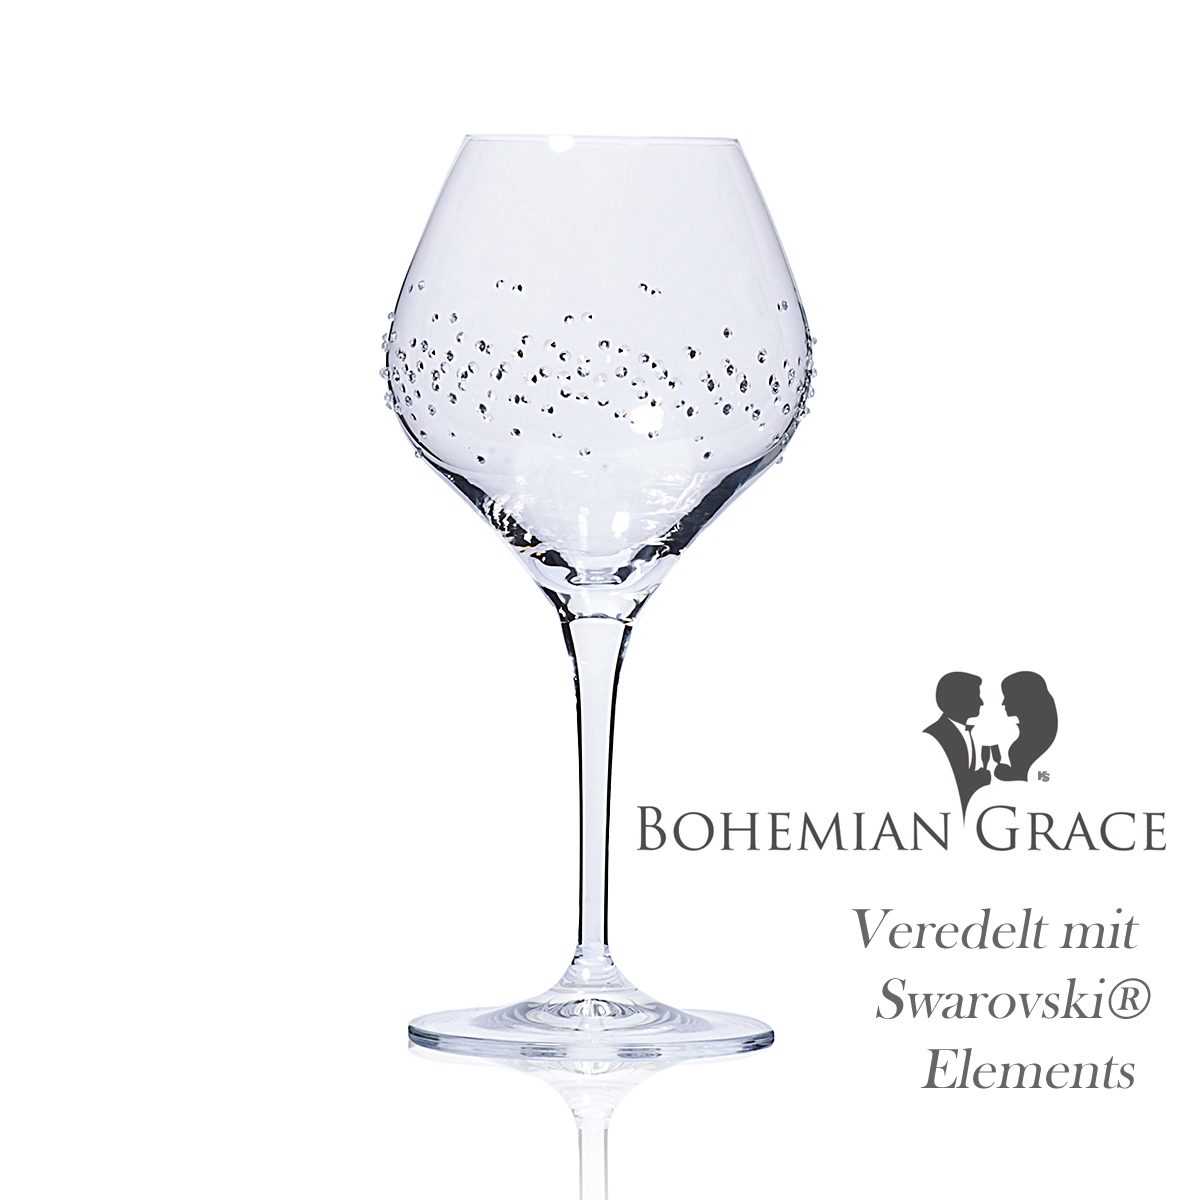 Weinglas 2Stk HERMES 280 Bohemian Grace - Weissweingläser HERMES 2Stk, mit Swarovski Elements